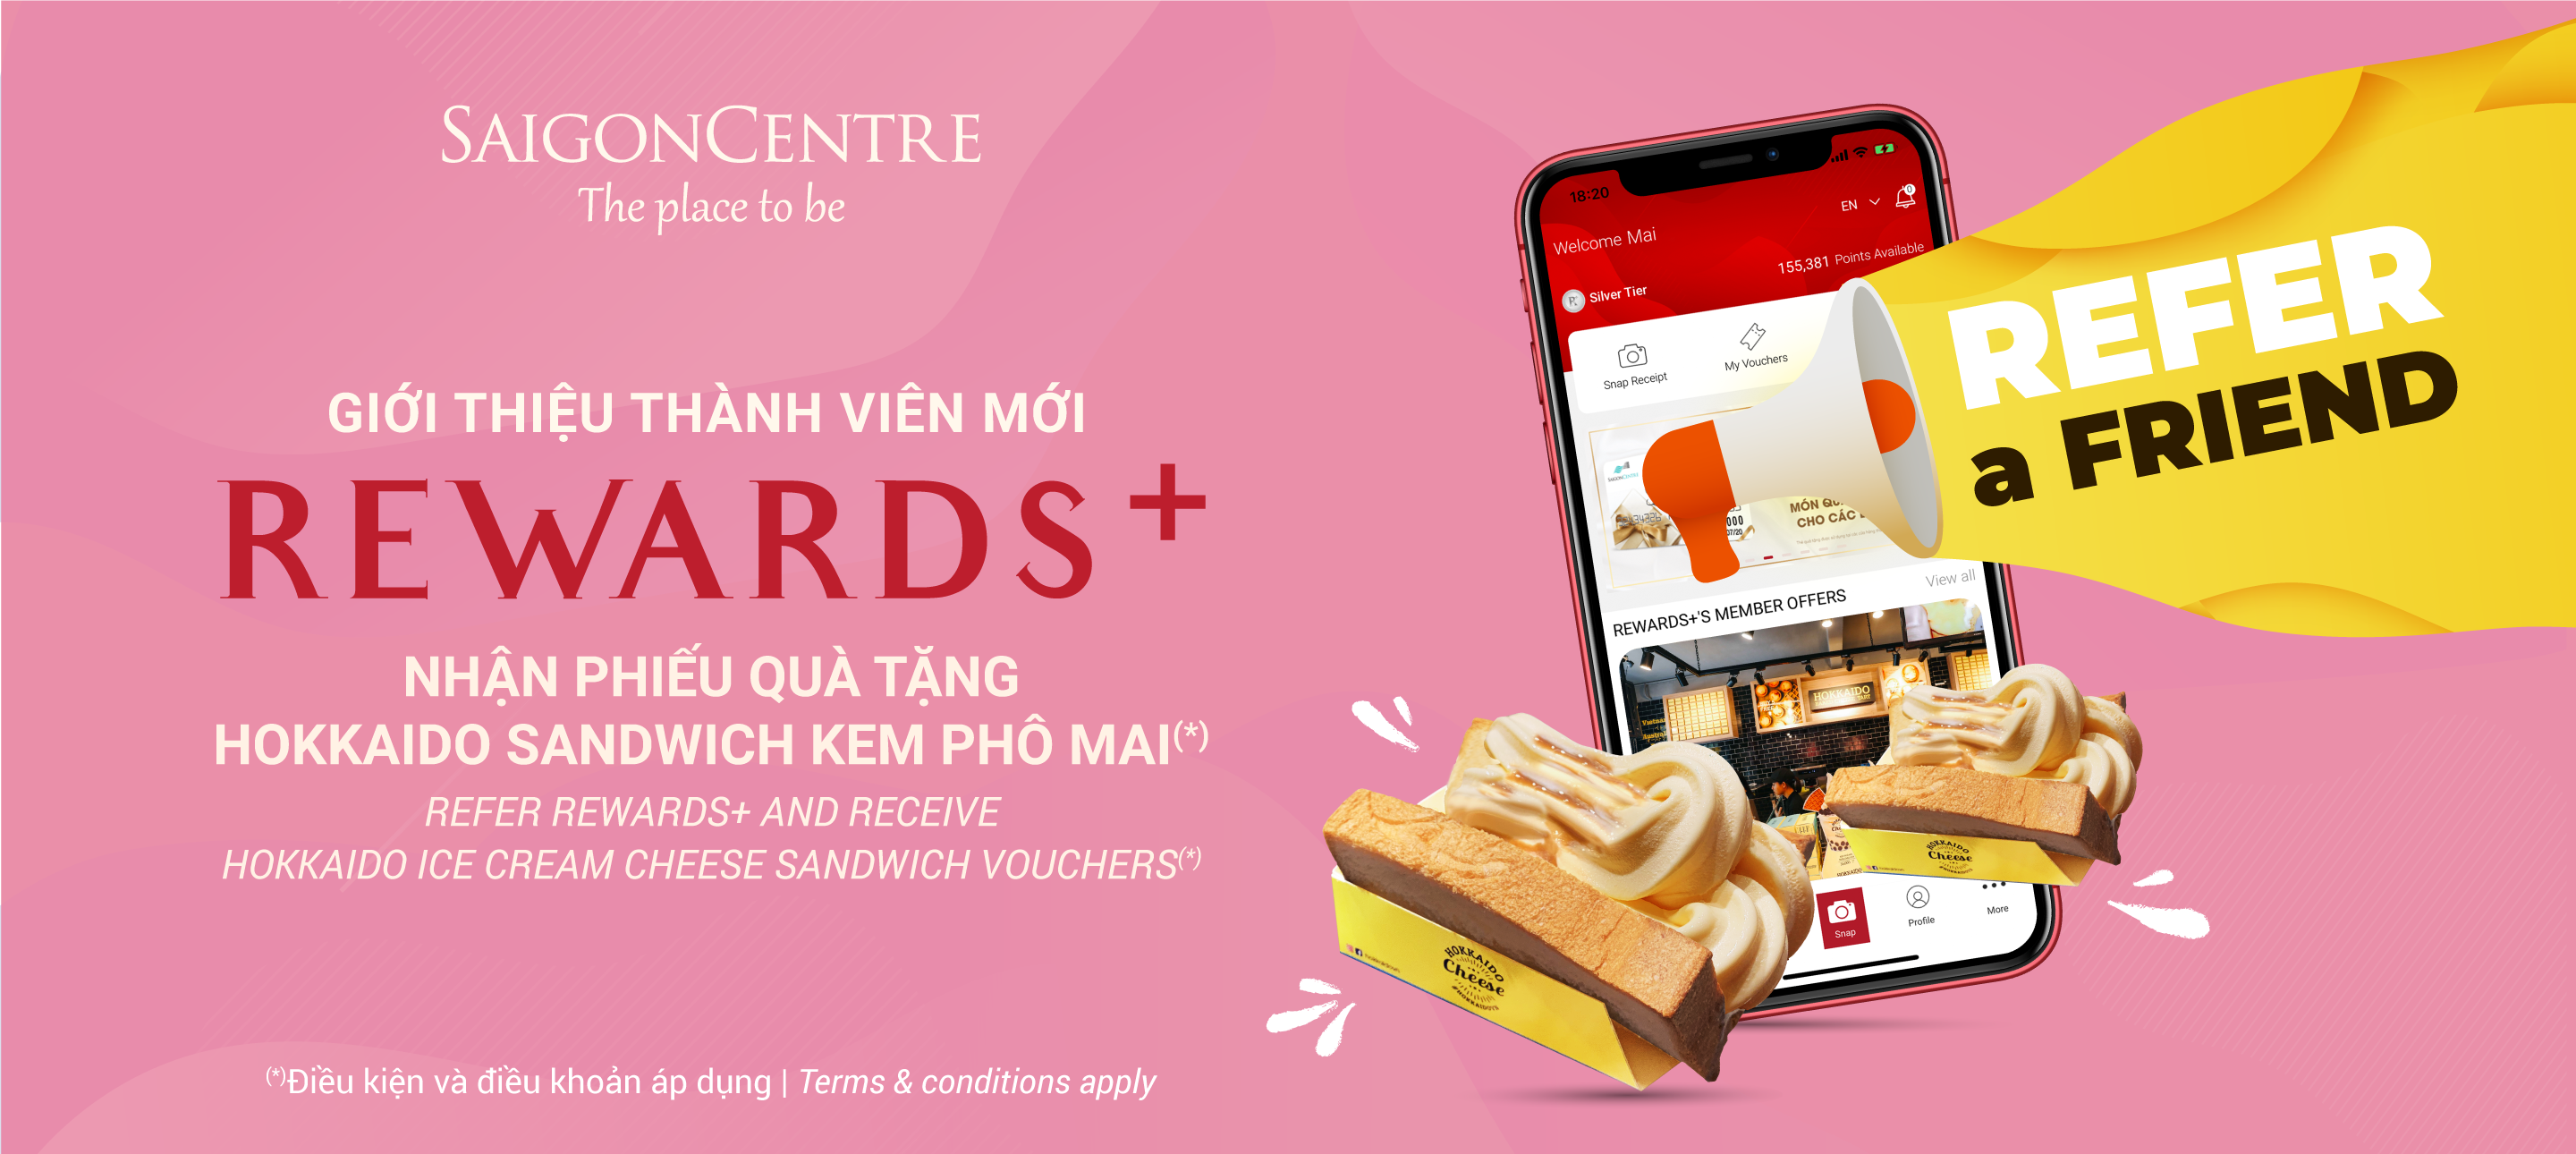 Refer Rewards+ and receive Hokkaido Ice Cream Cheese Sandwich vouchers (*)